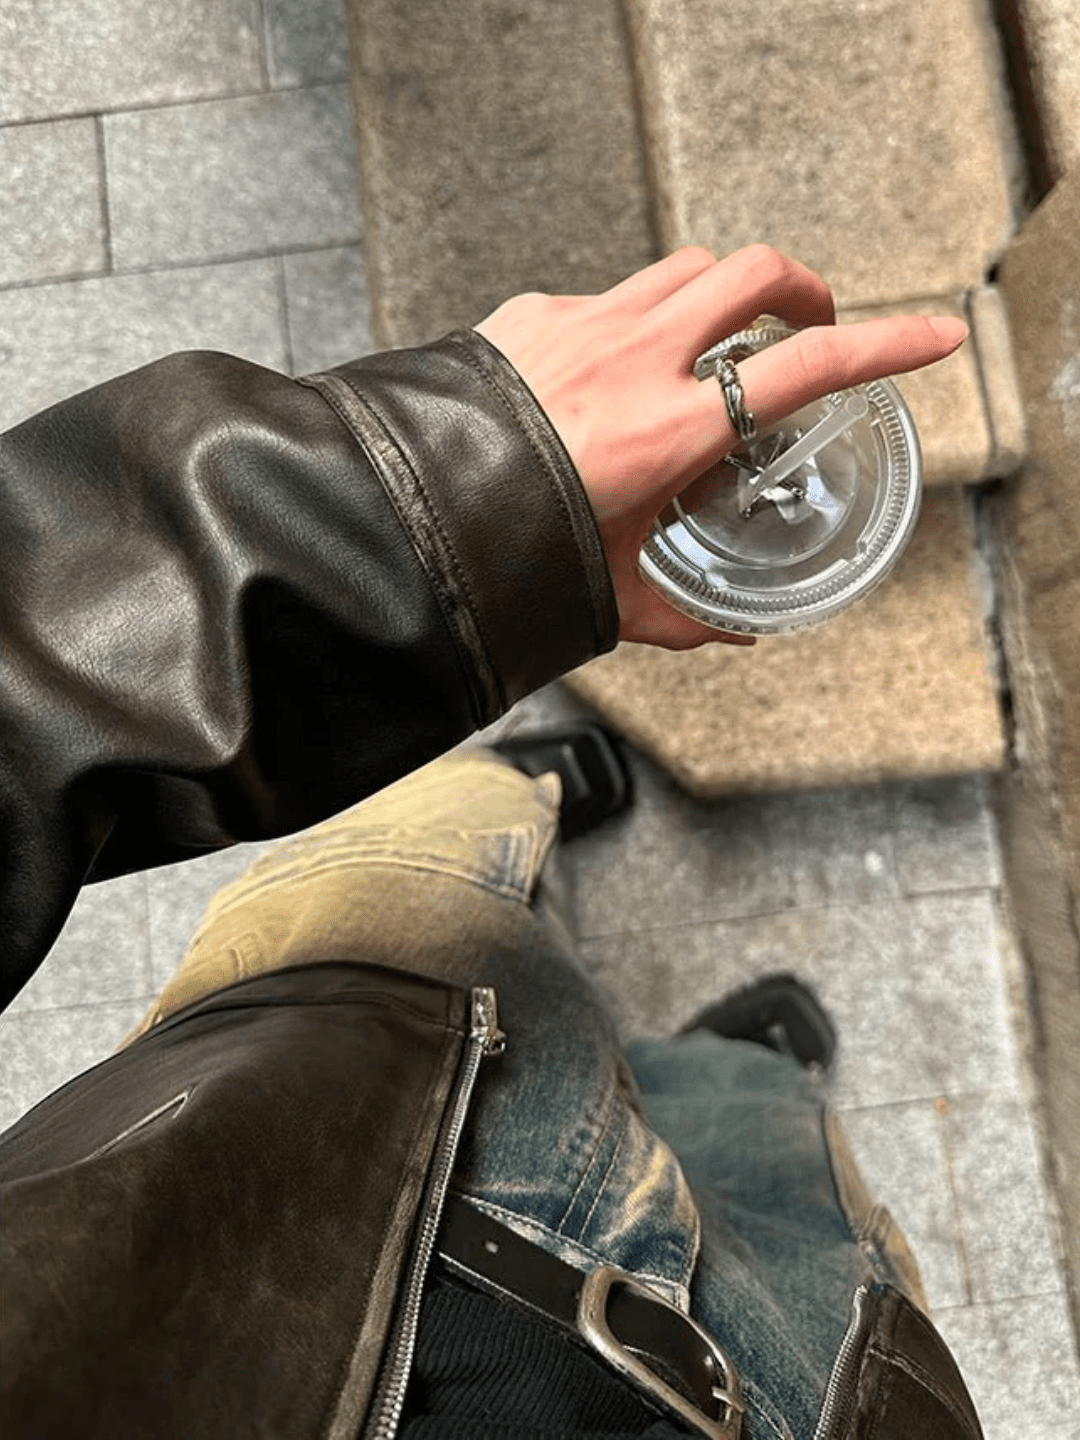 [JM HOMME] Retro motorcycle leather jacket na677 